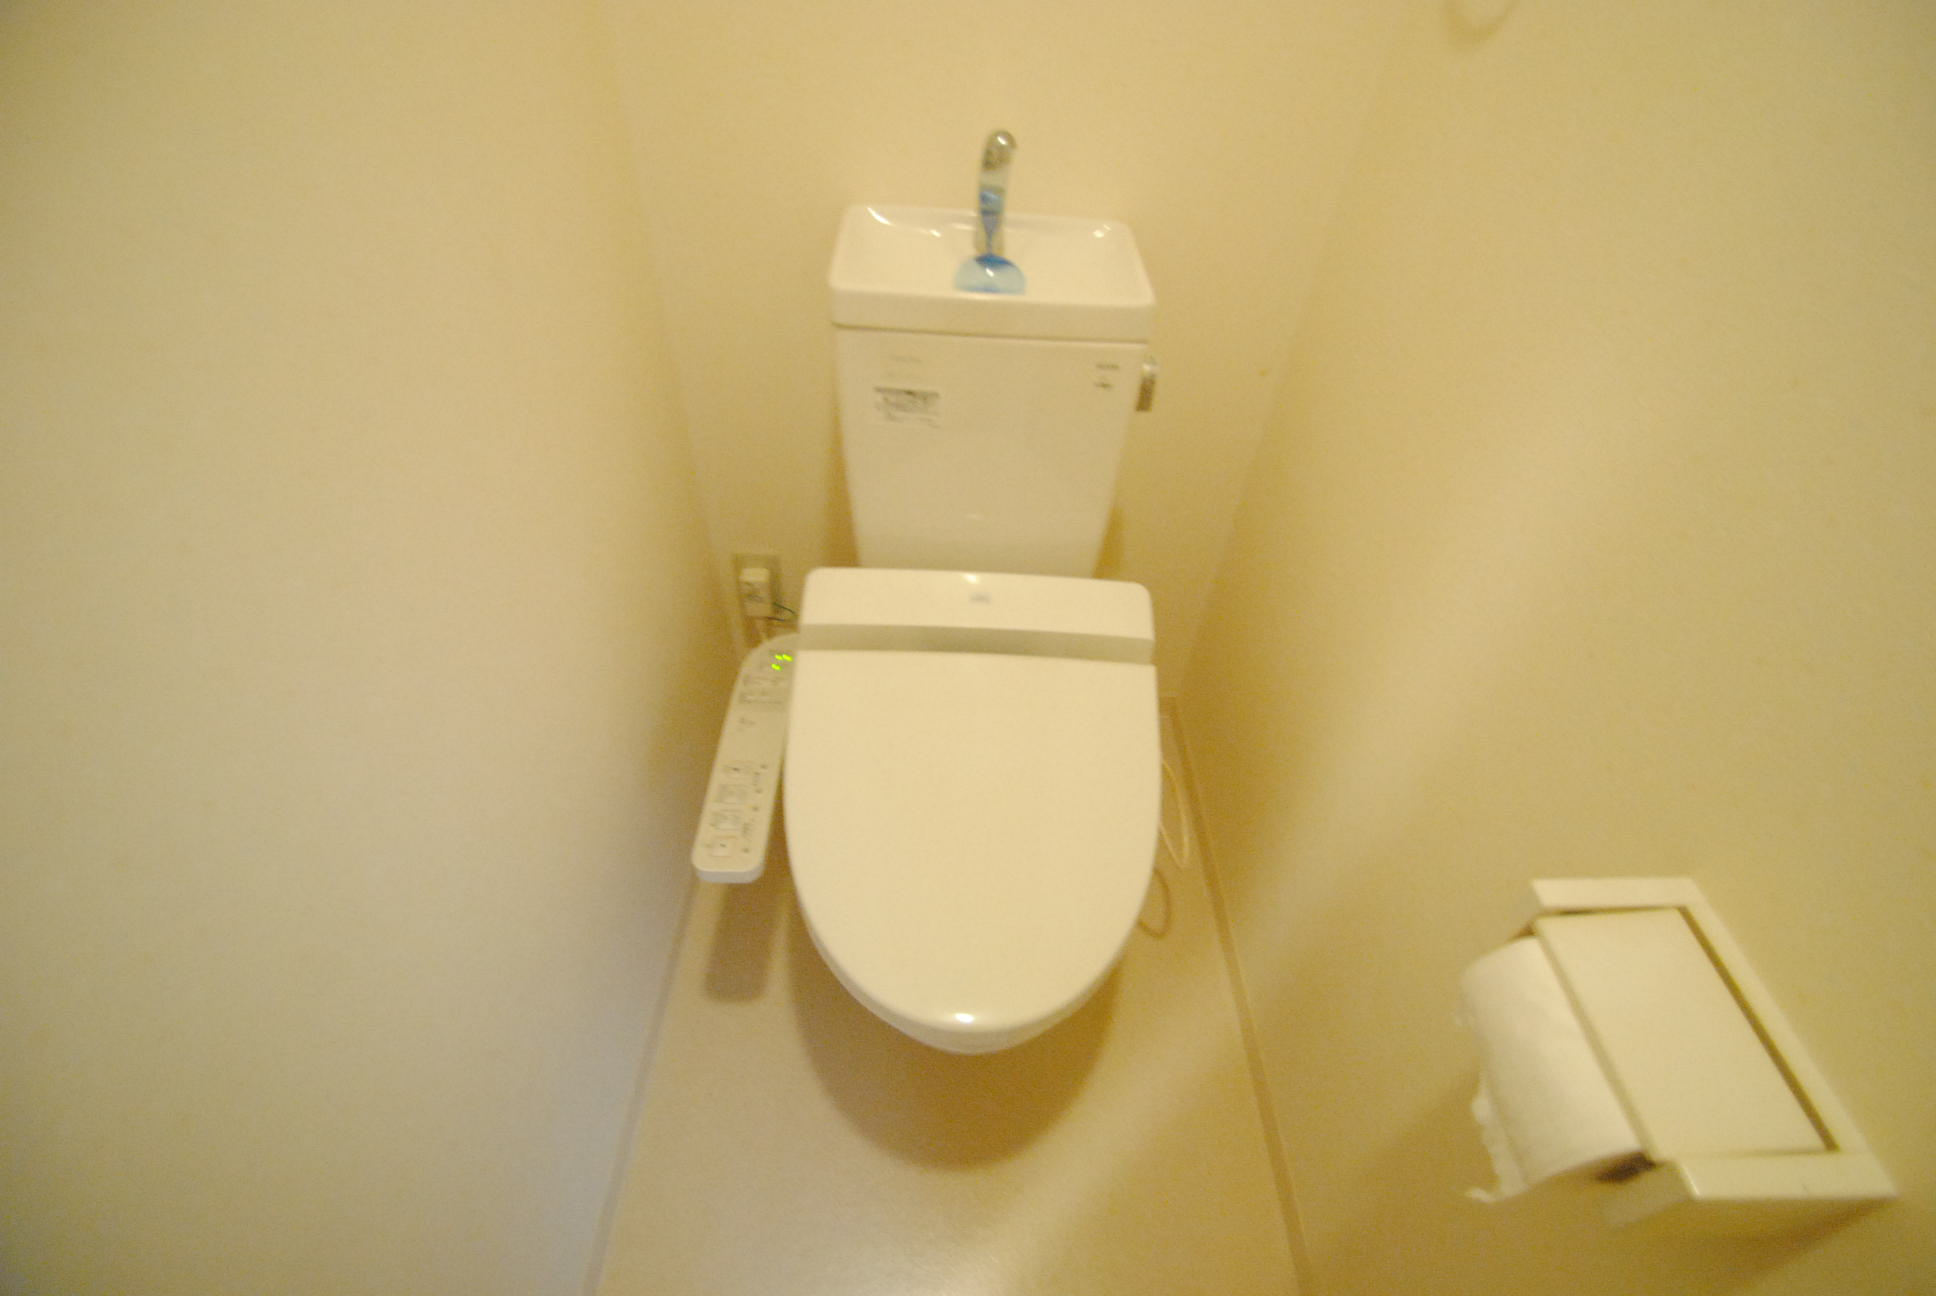 Toilet. Hot-water heating toilet seat